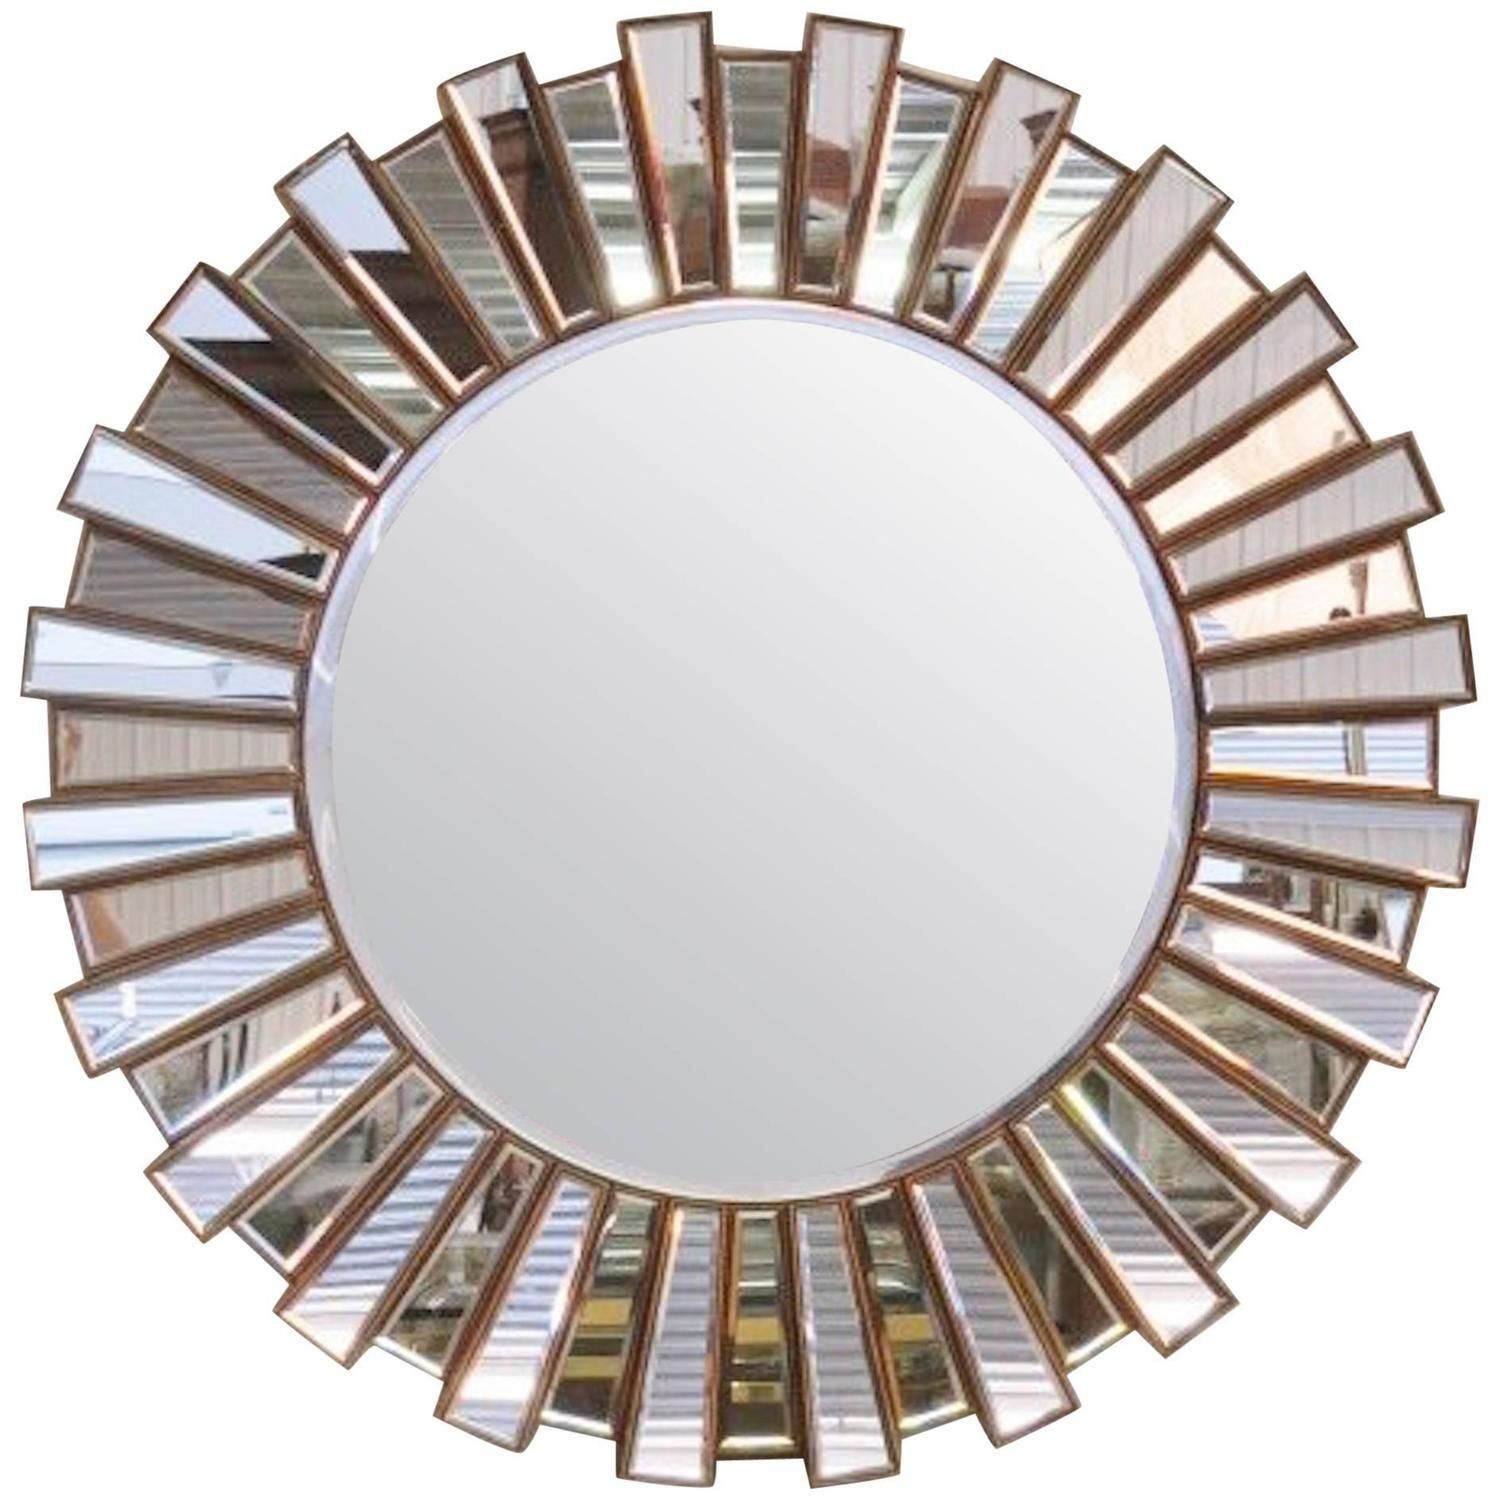 Large Mirrored Sunburst Mirror At 1stdibs In Sunburst Mirrored Wall Art (View 3 of 15)